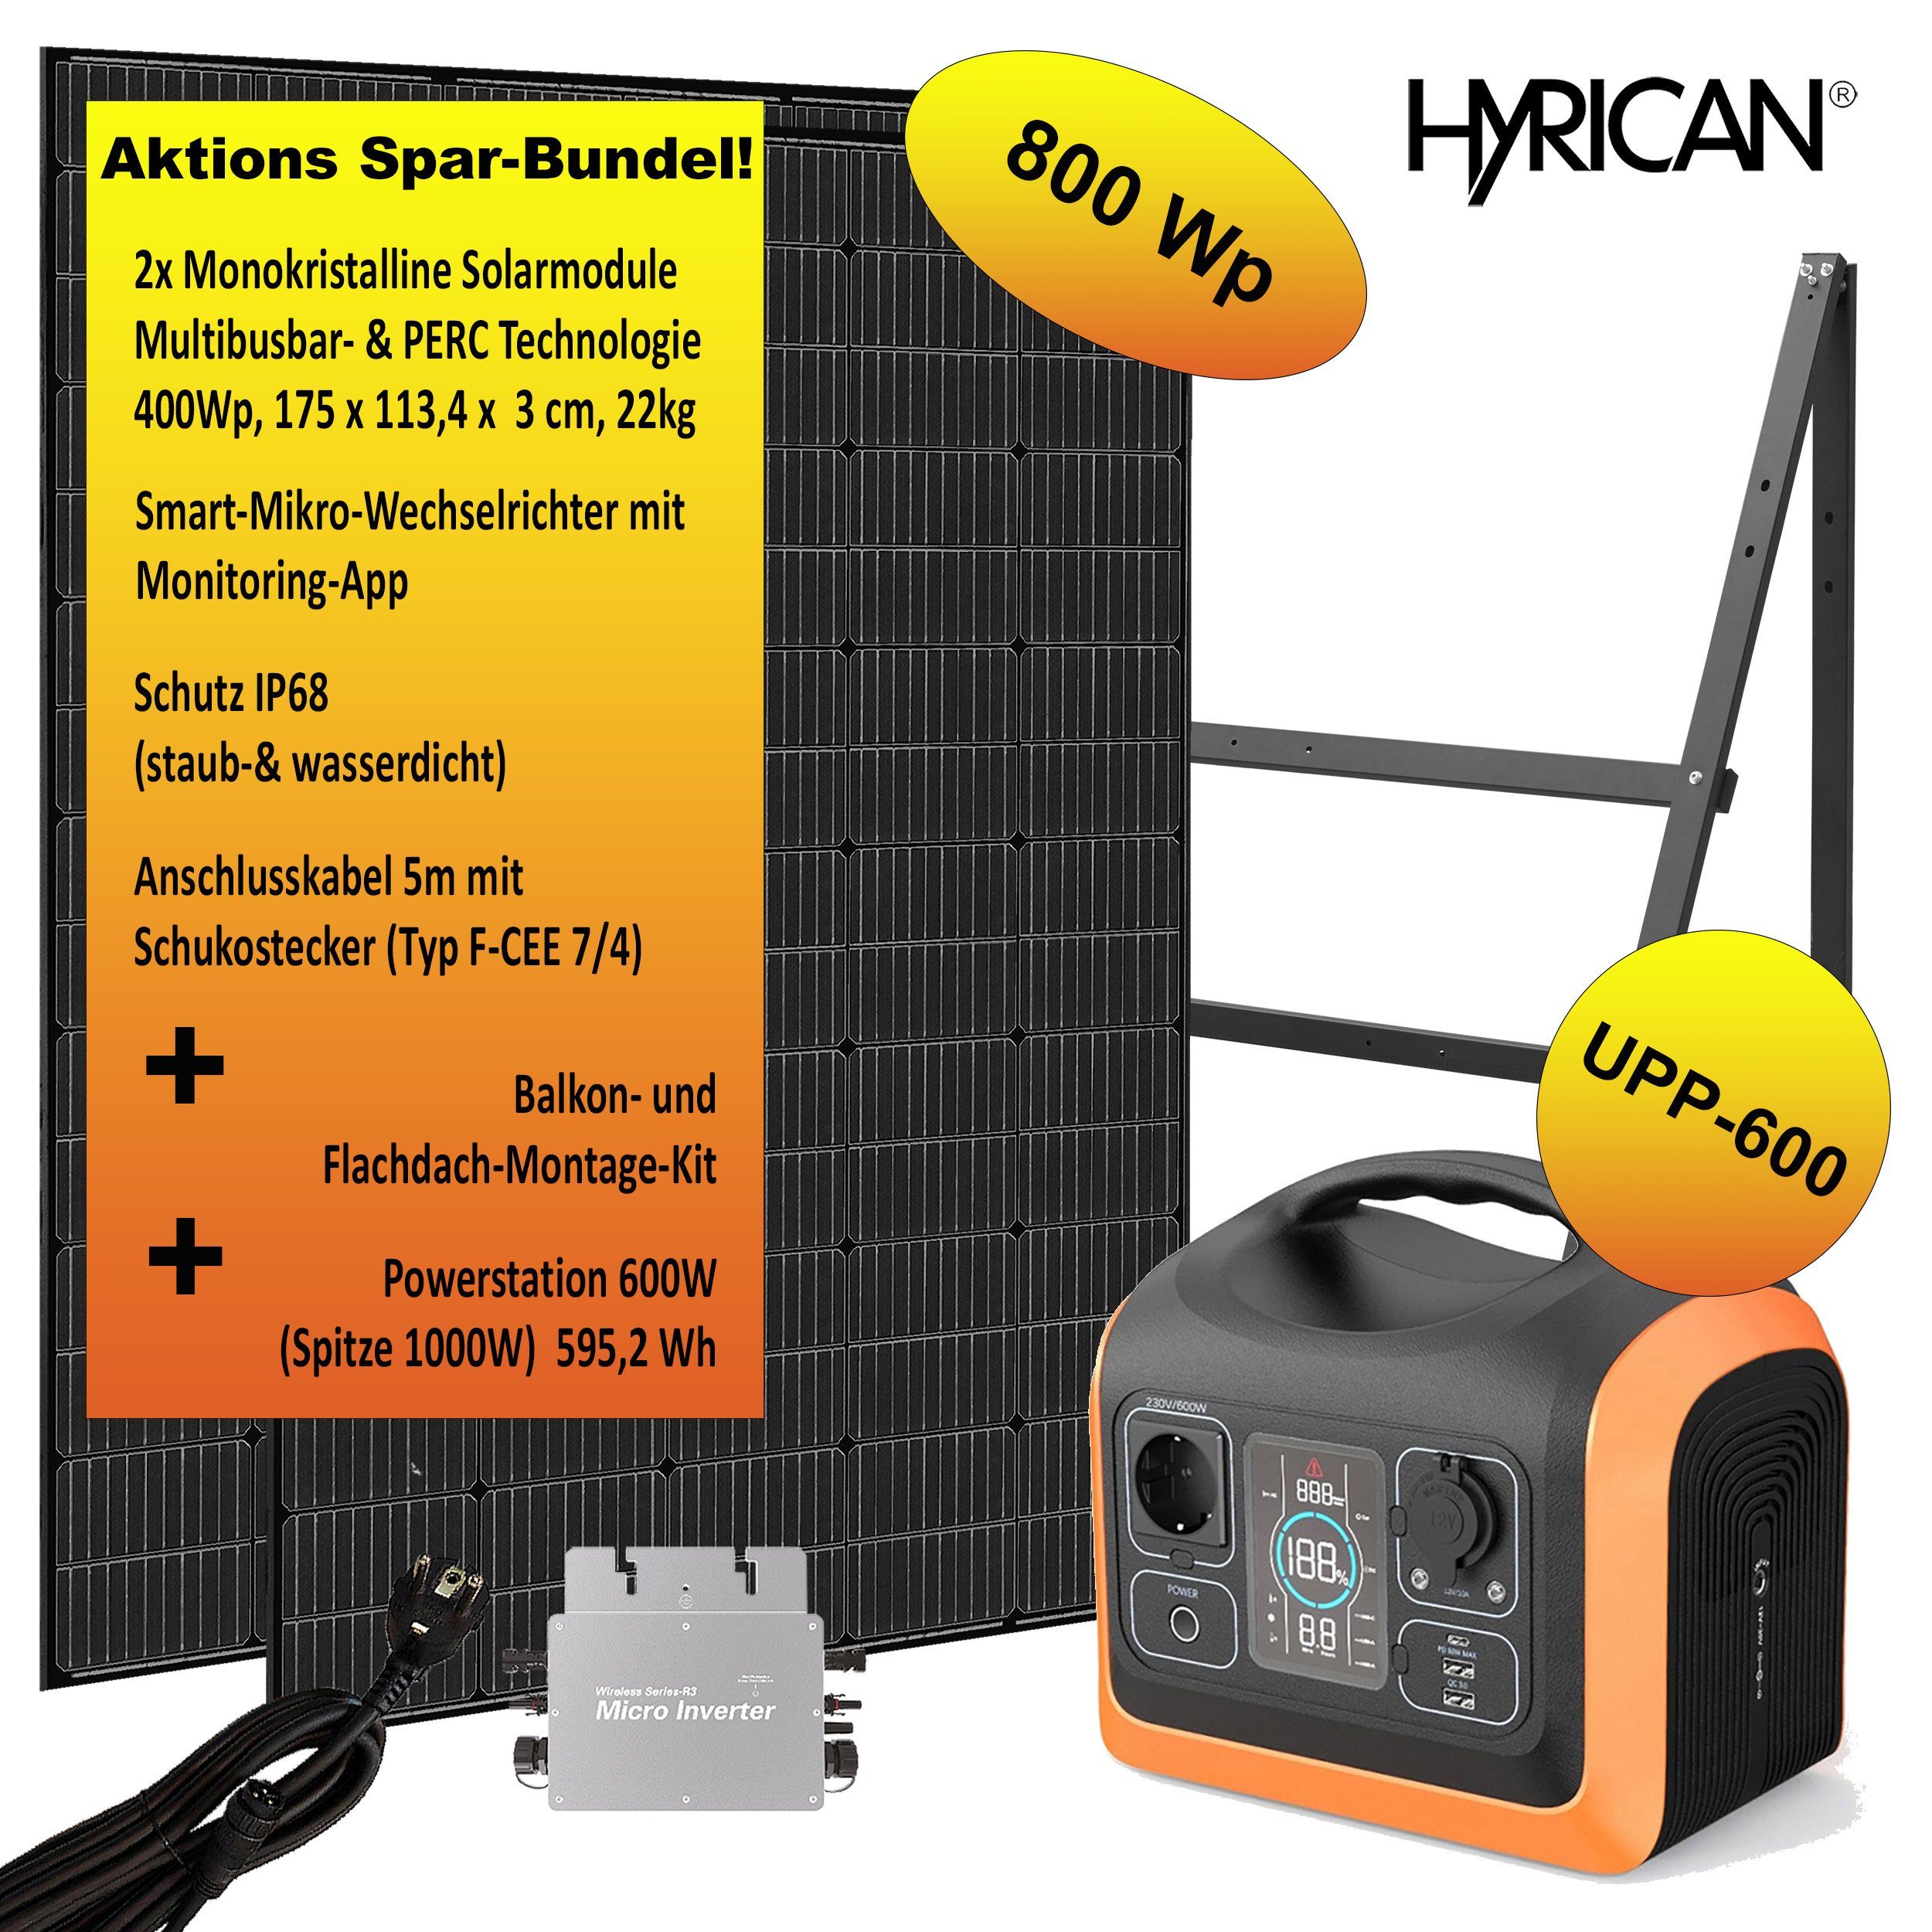 Hyrican Solaranlage Aktions Spar-Bundel: Balkonkraftwerk 800Wp & Powerstation 600W